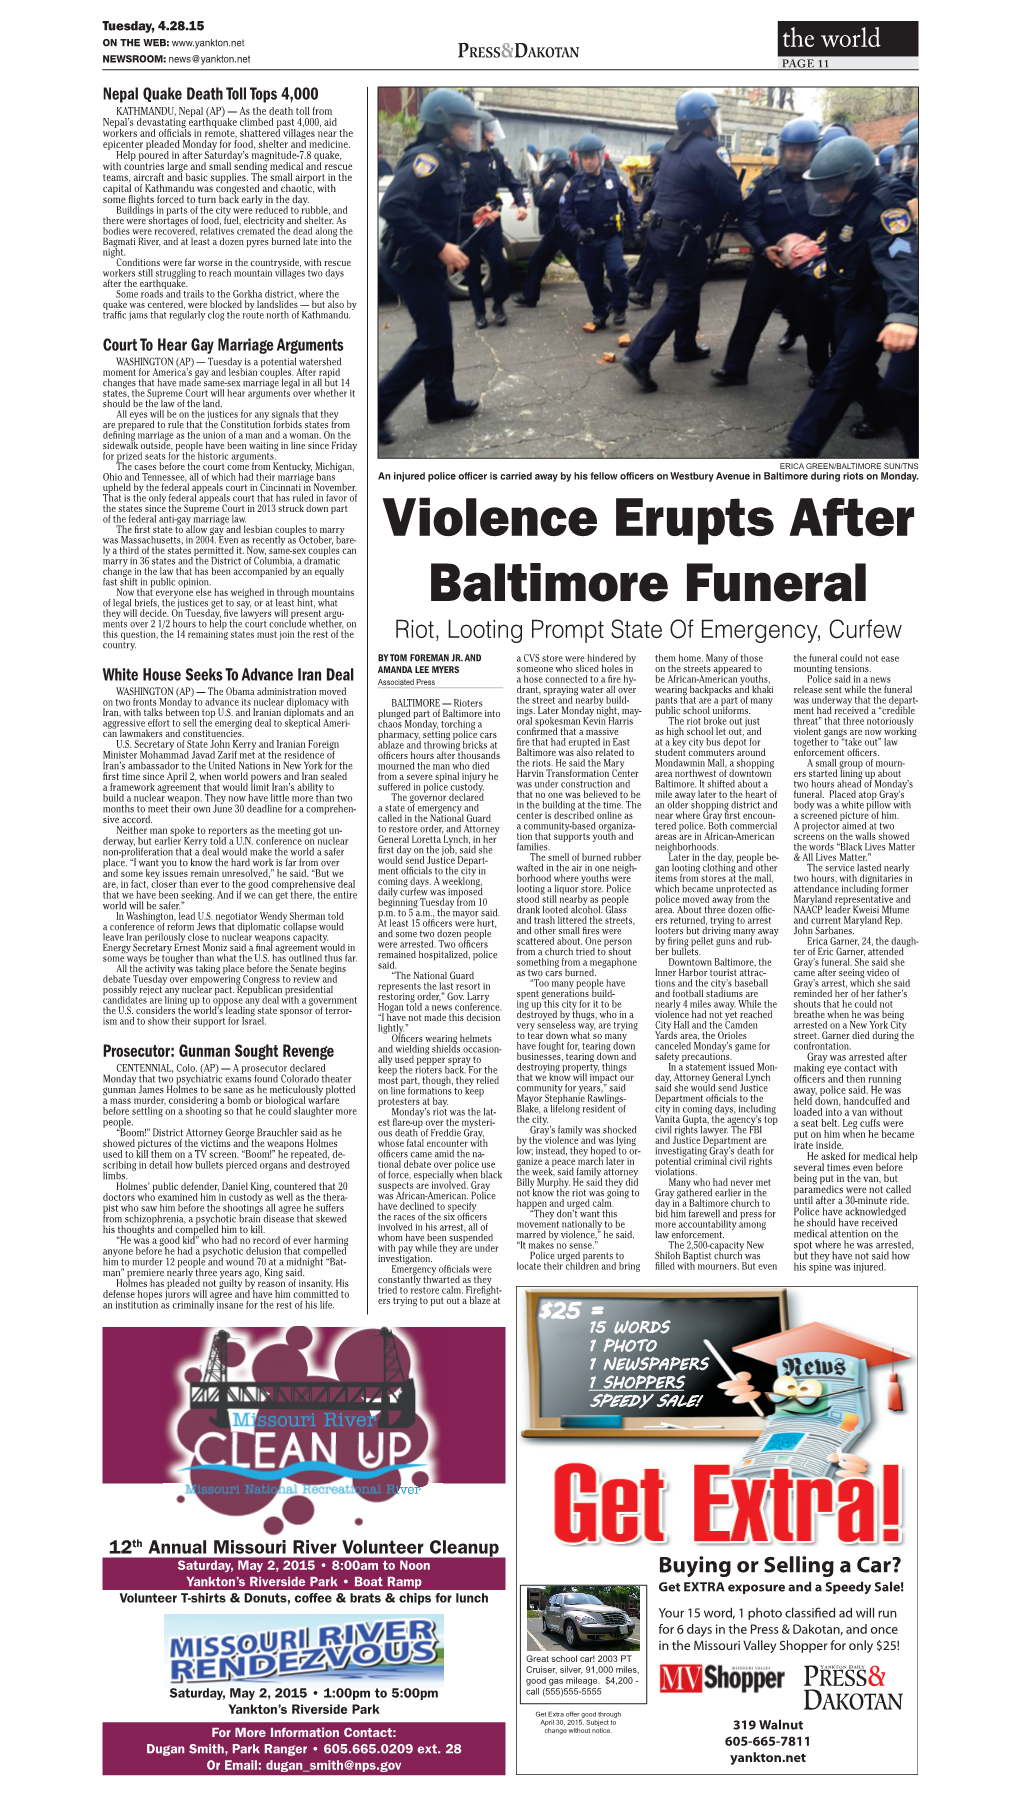 Violence Erupts After Baltimore Funeral